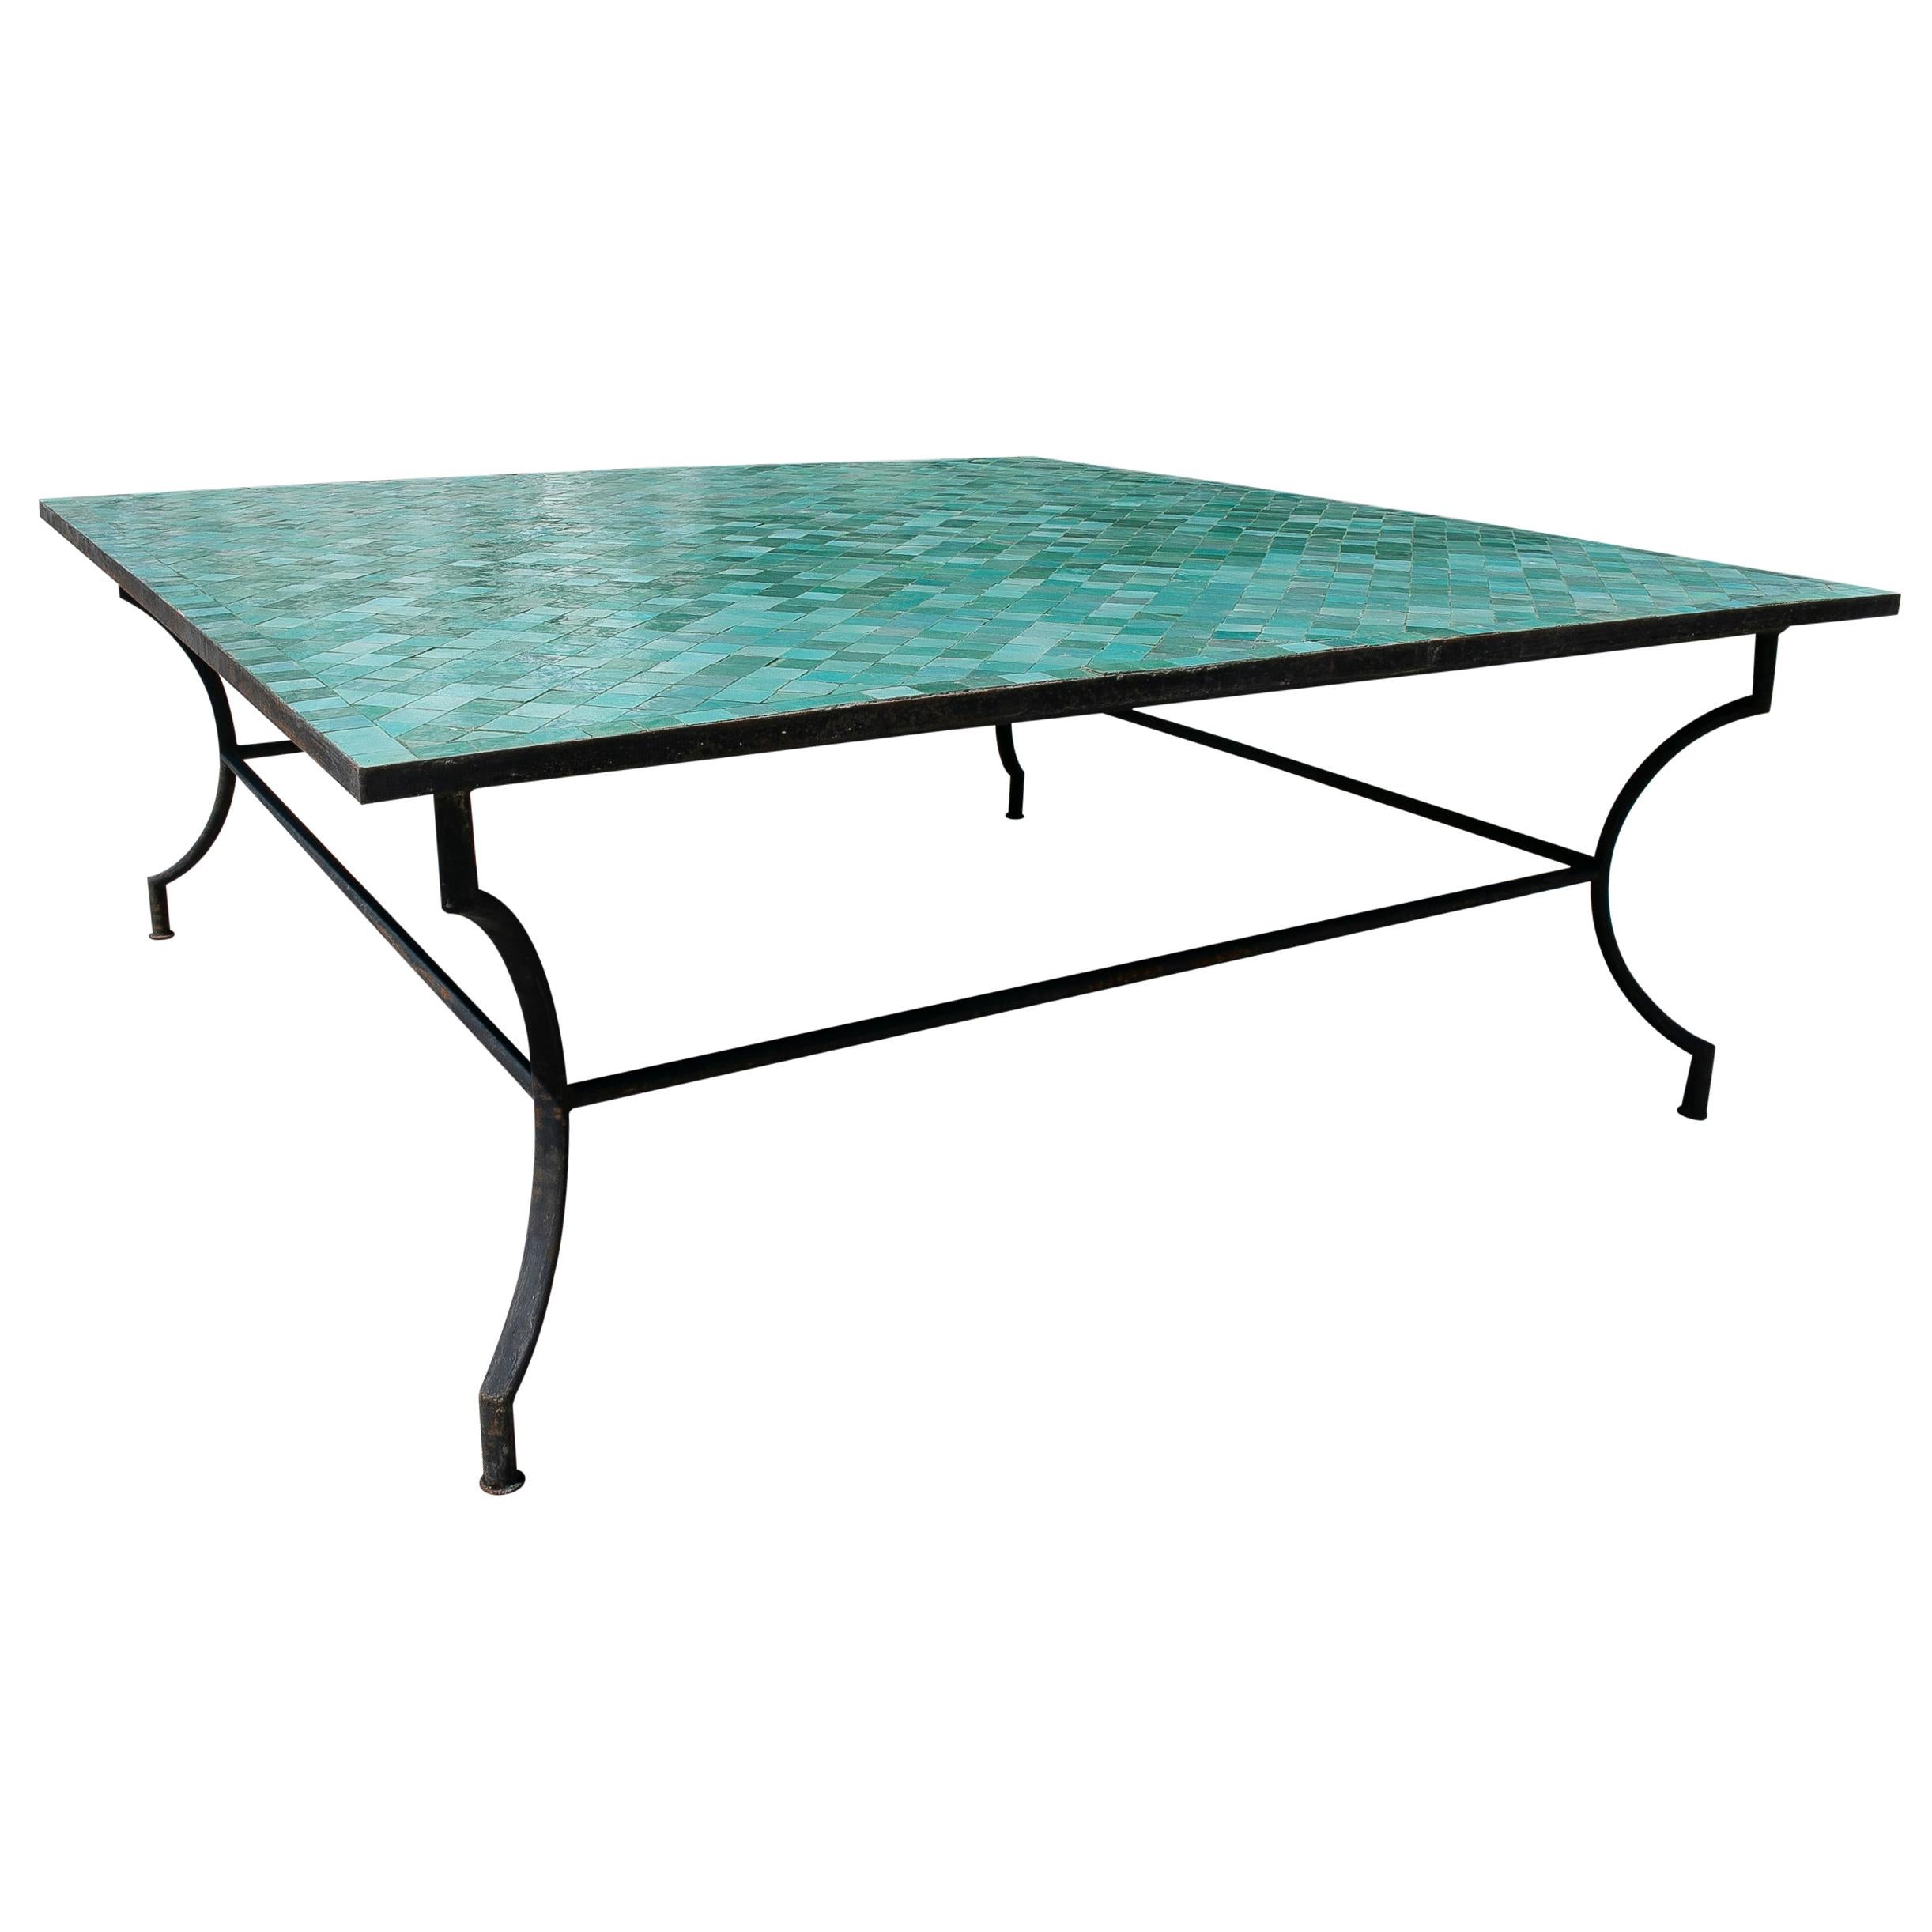 Large Square Spanish Green Glazed Zellige Tiled Mosaic Iron Outdoor Table